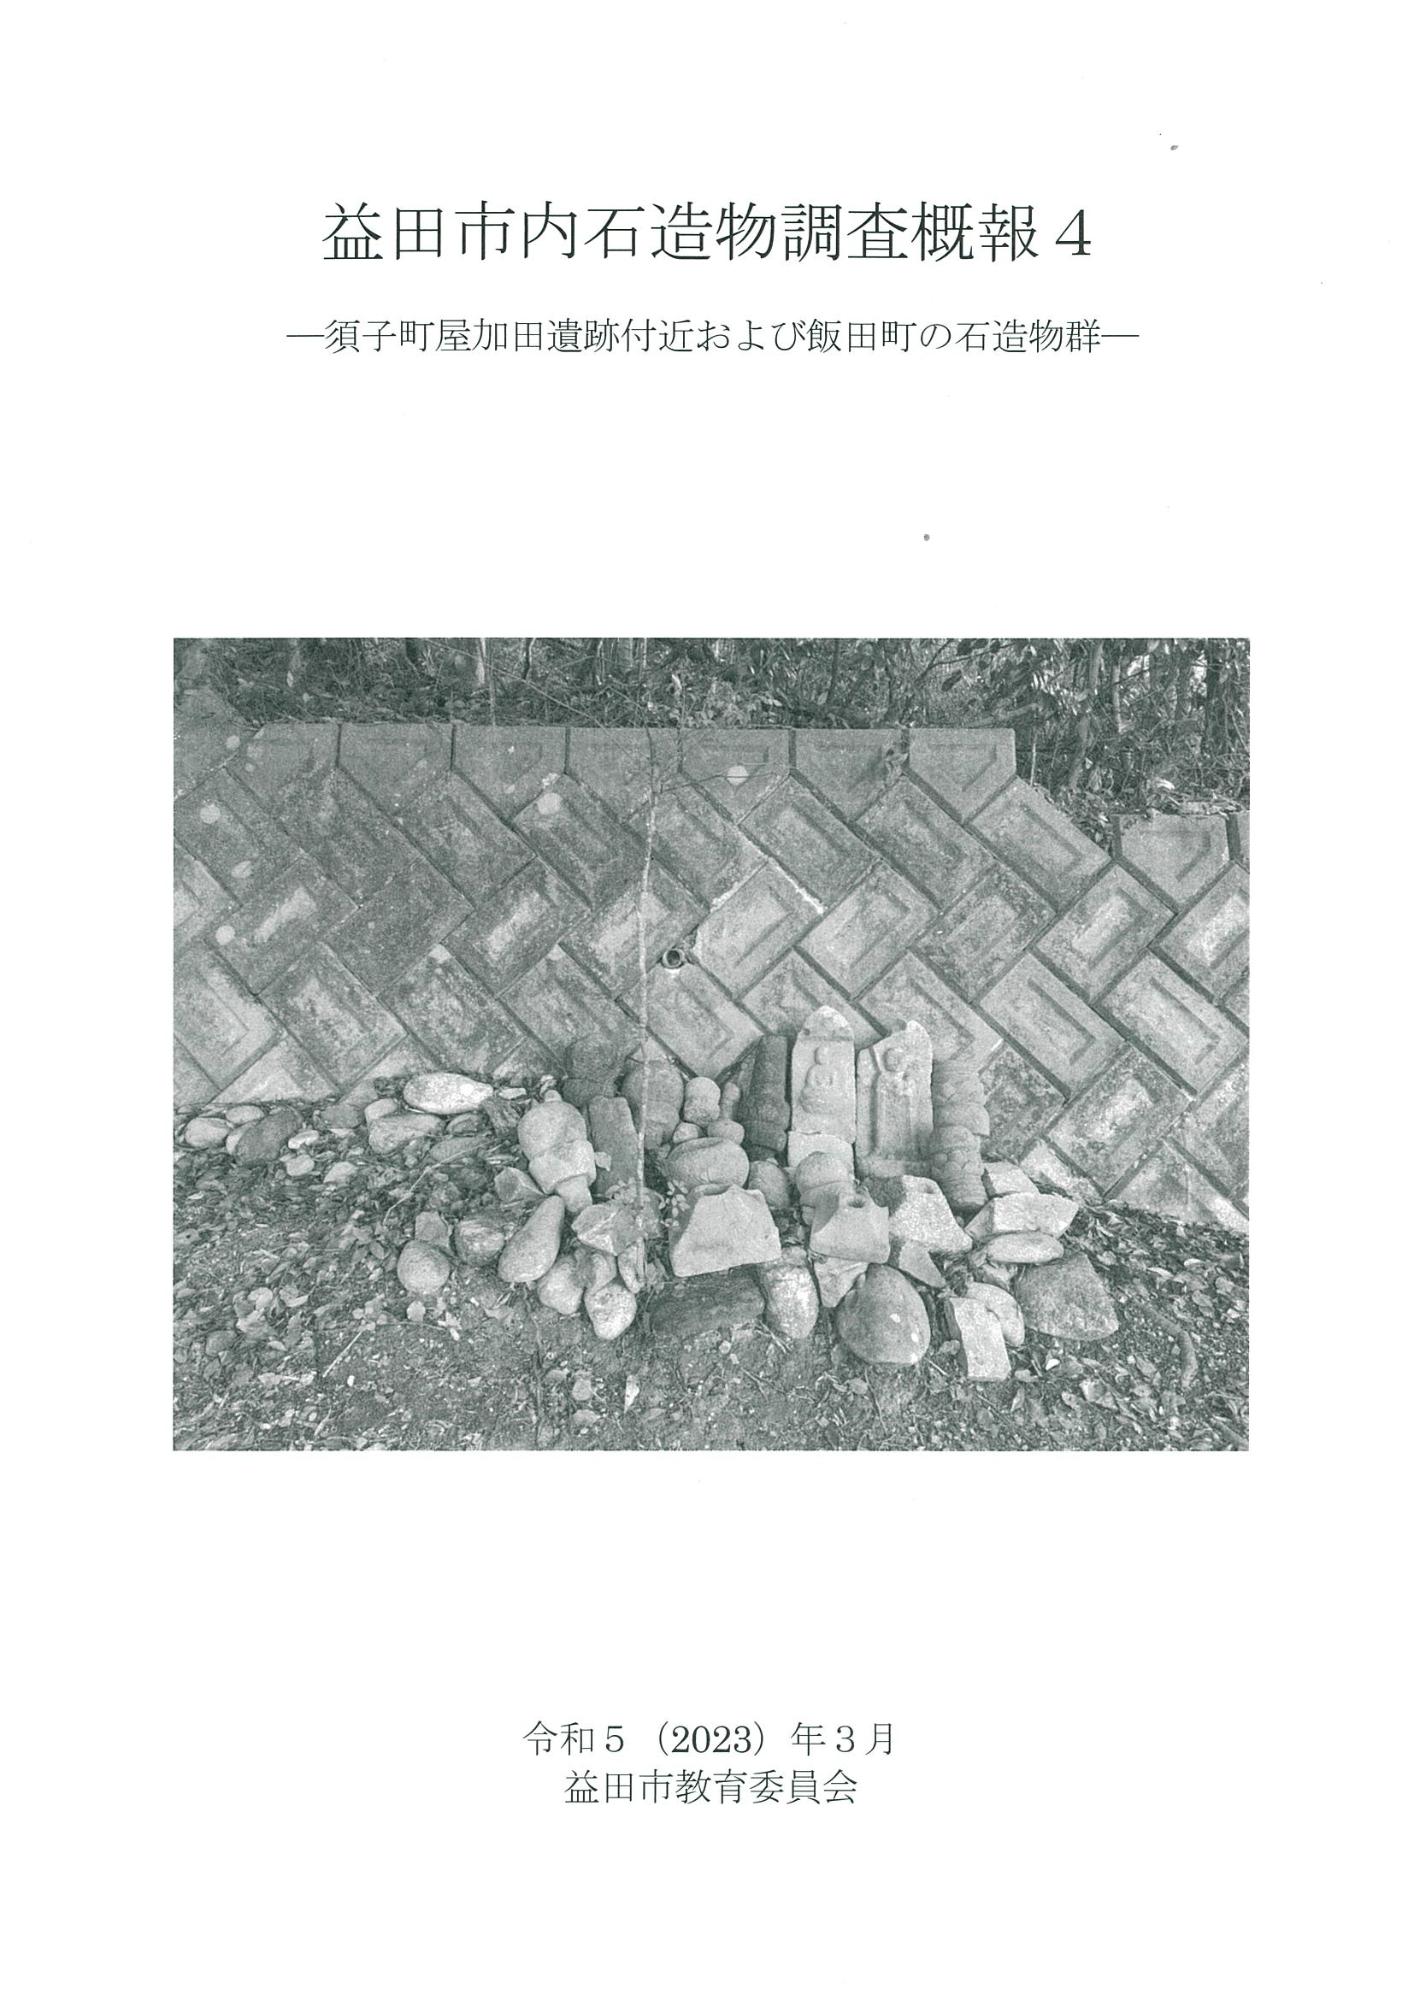 『益田市内石造物調査概報―須子町屋加田遺跡付近および飯田町の石造物群―』